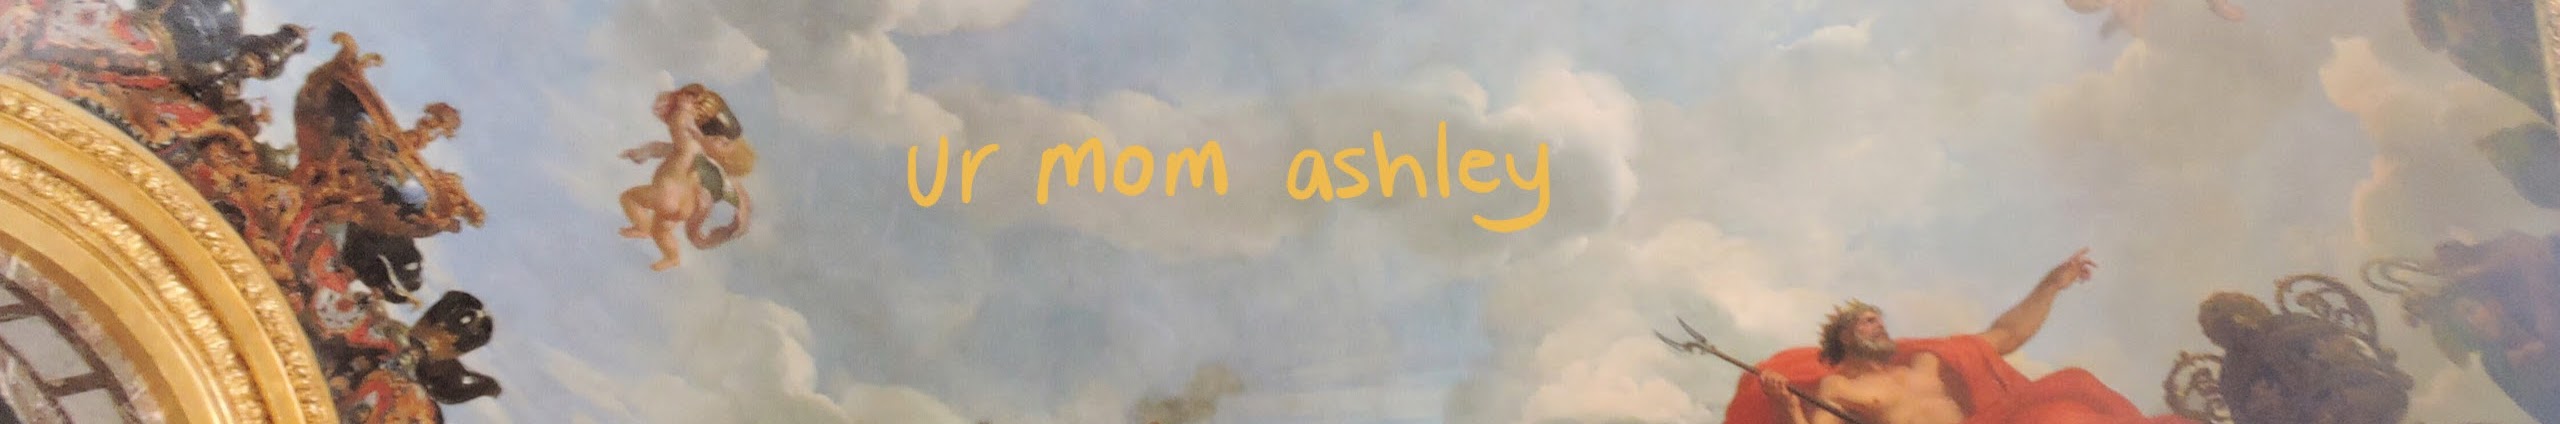 ur mom ashley banner